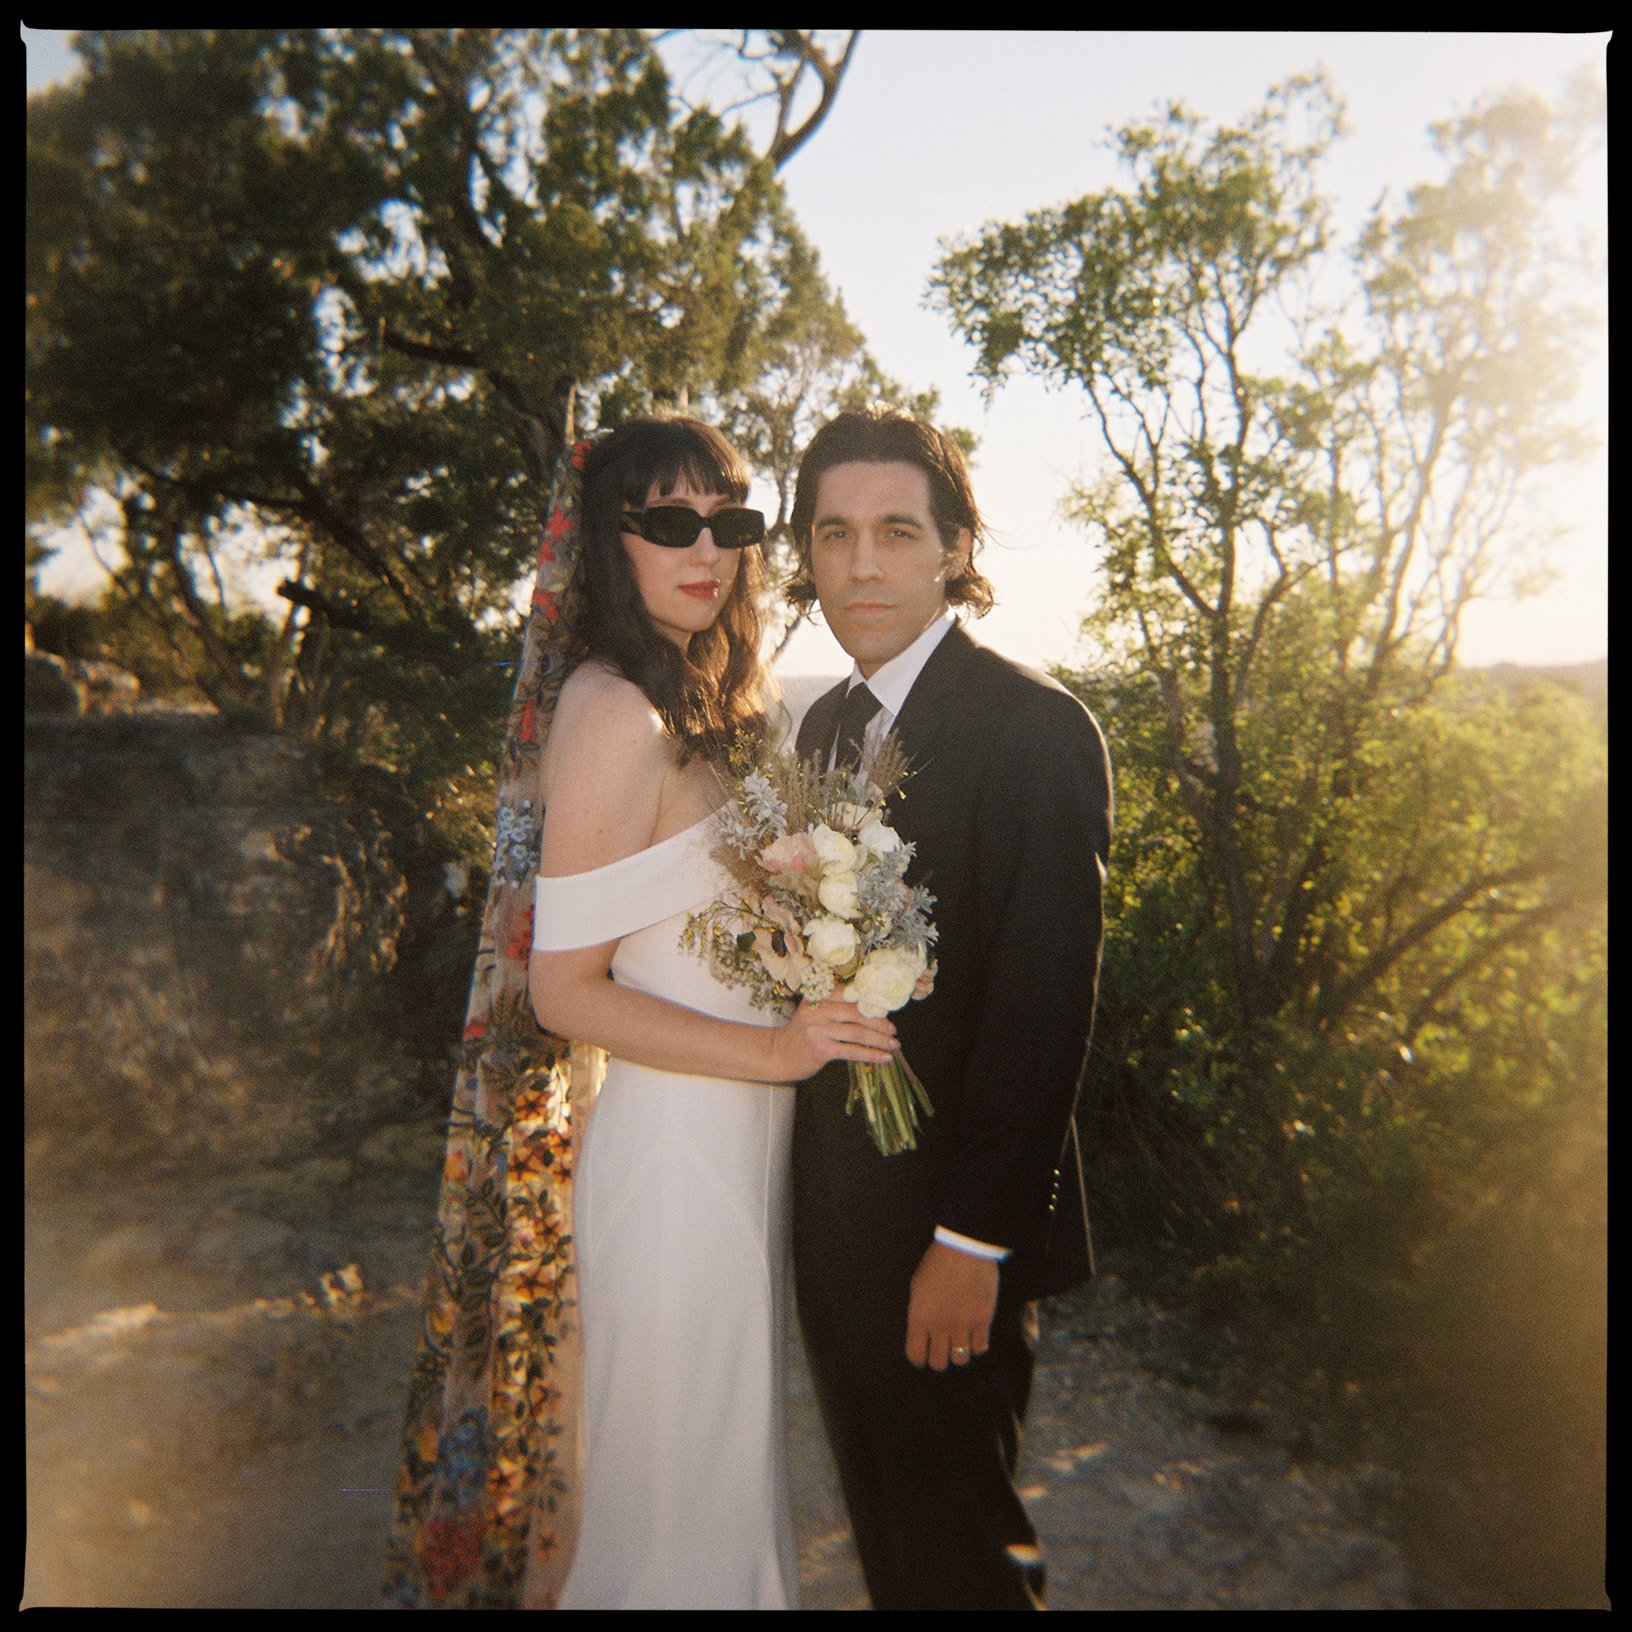 Best-Austin-Wedding-Photographers-Elopement-Film-35mm-Asheville-Santa-Barbara-Laguna-Gloria-31 copy.jpg